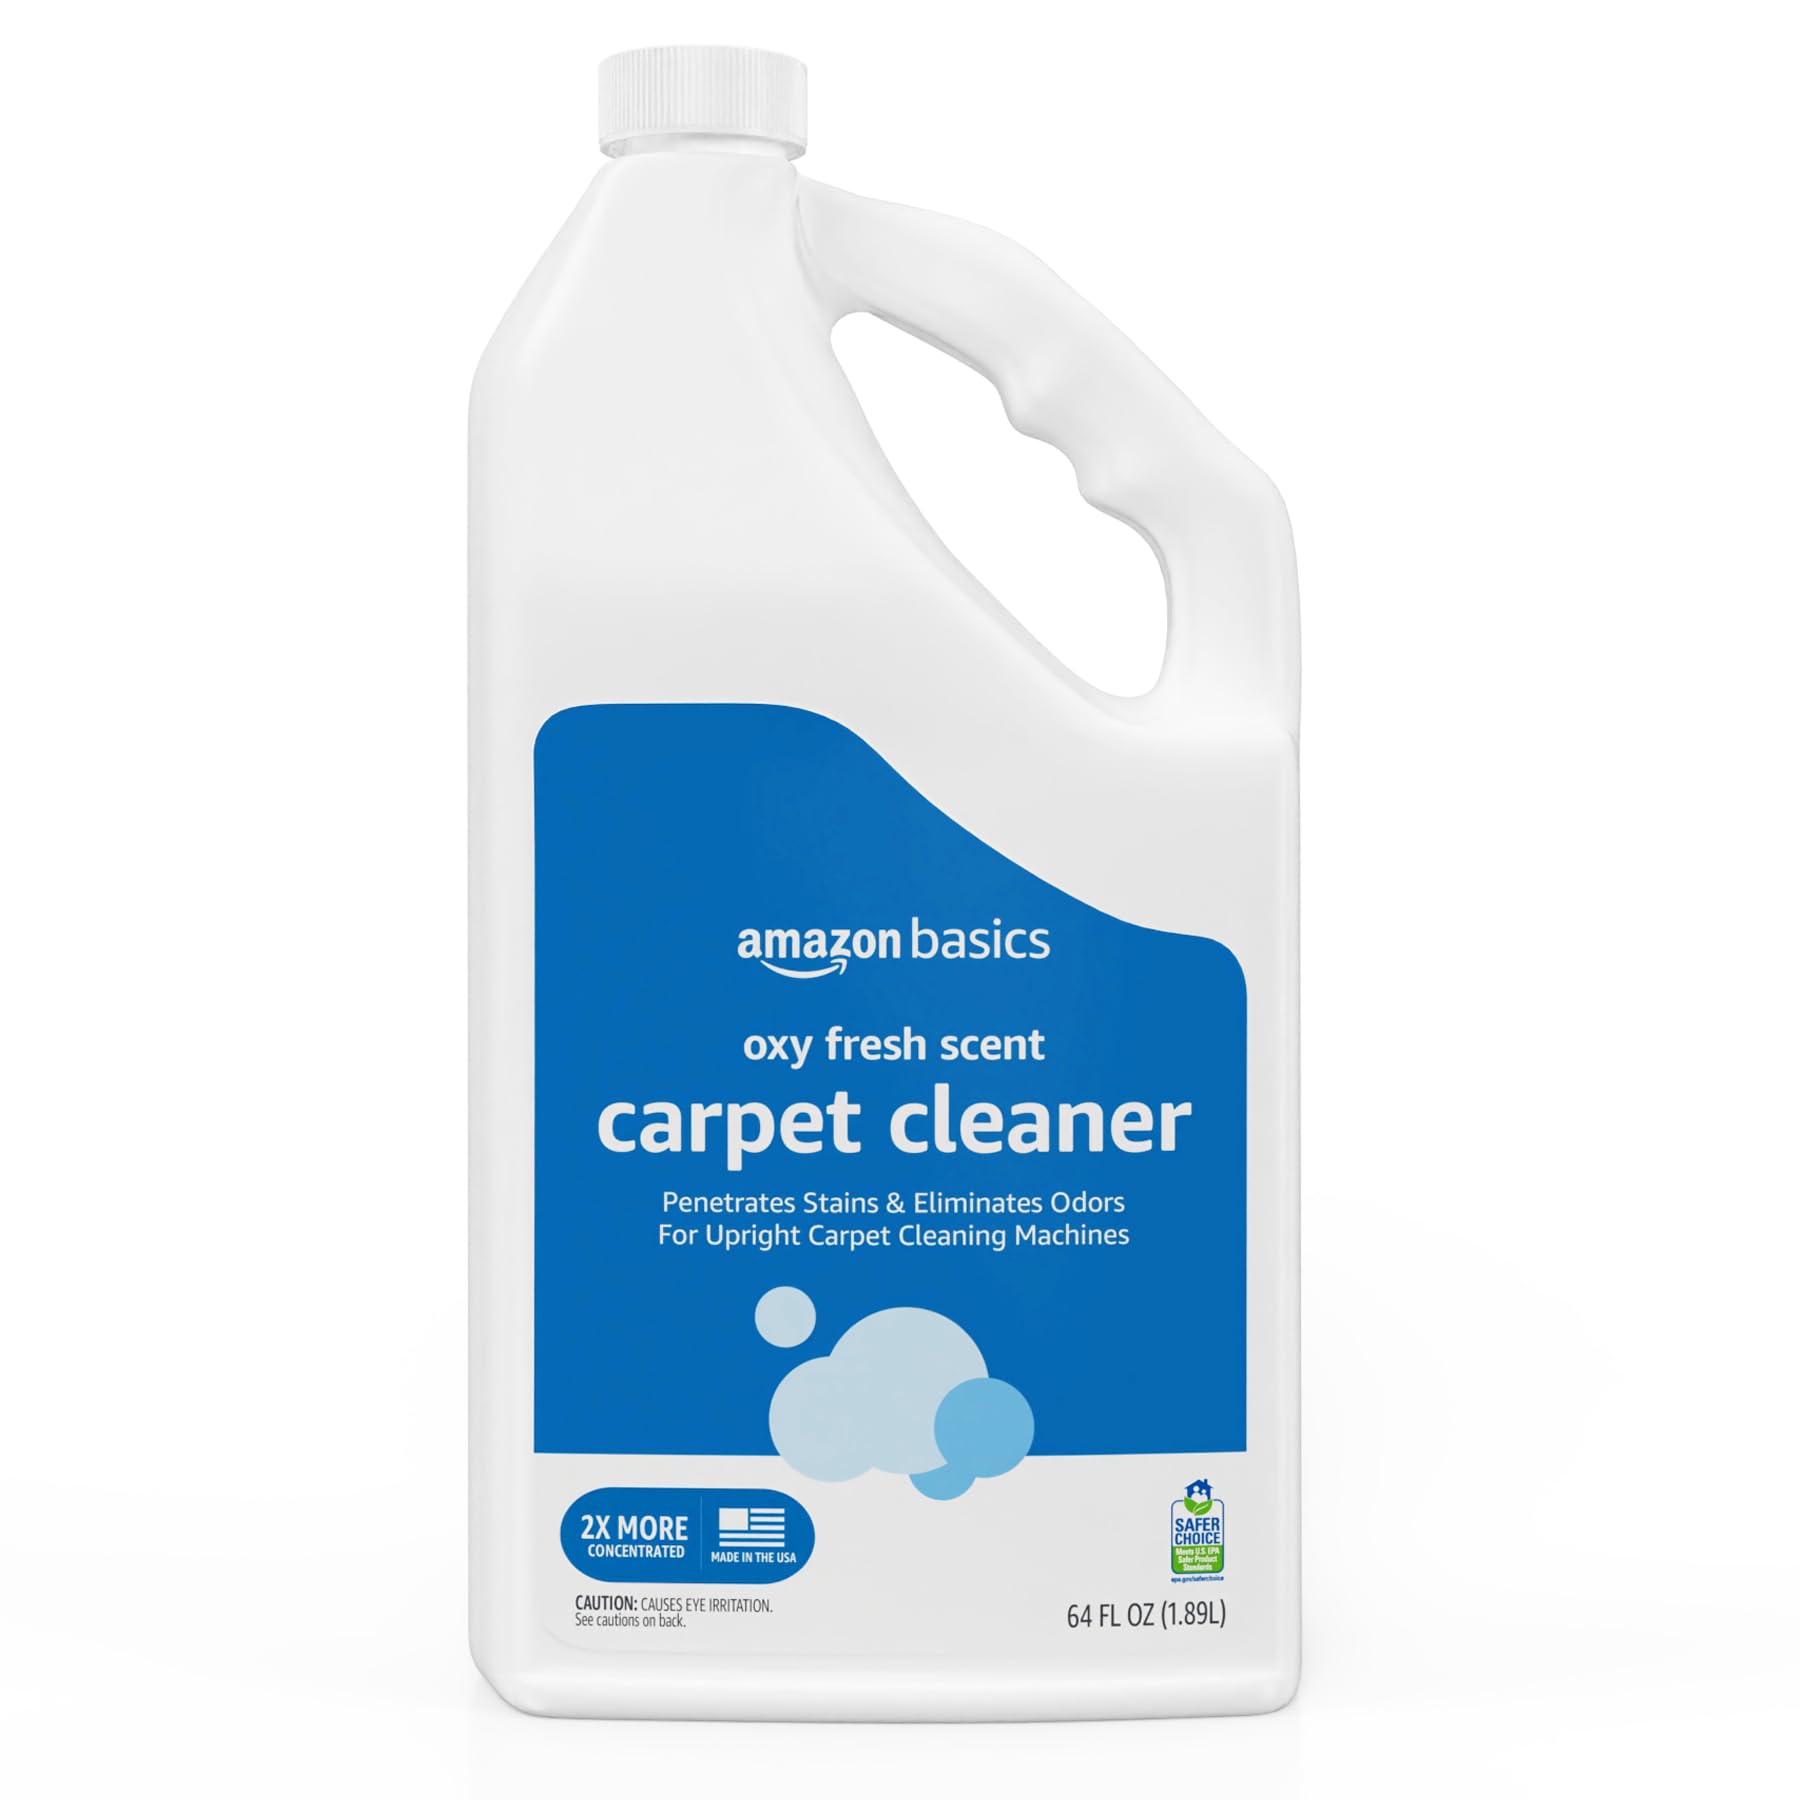 Amazon Basics - Oxy Fresh Scent Carpet Cleaner 64 fl oz.